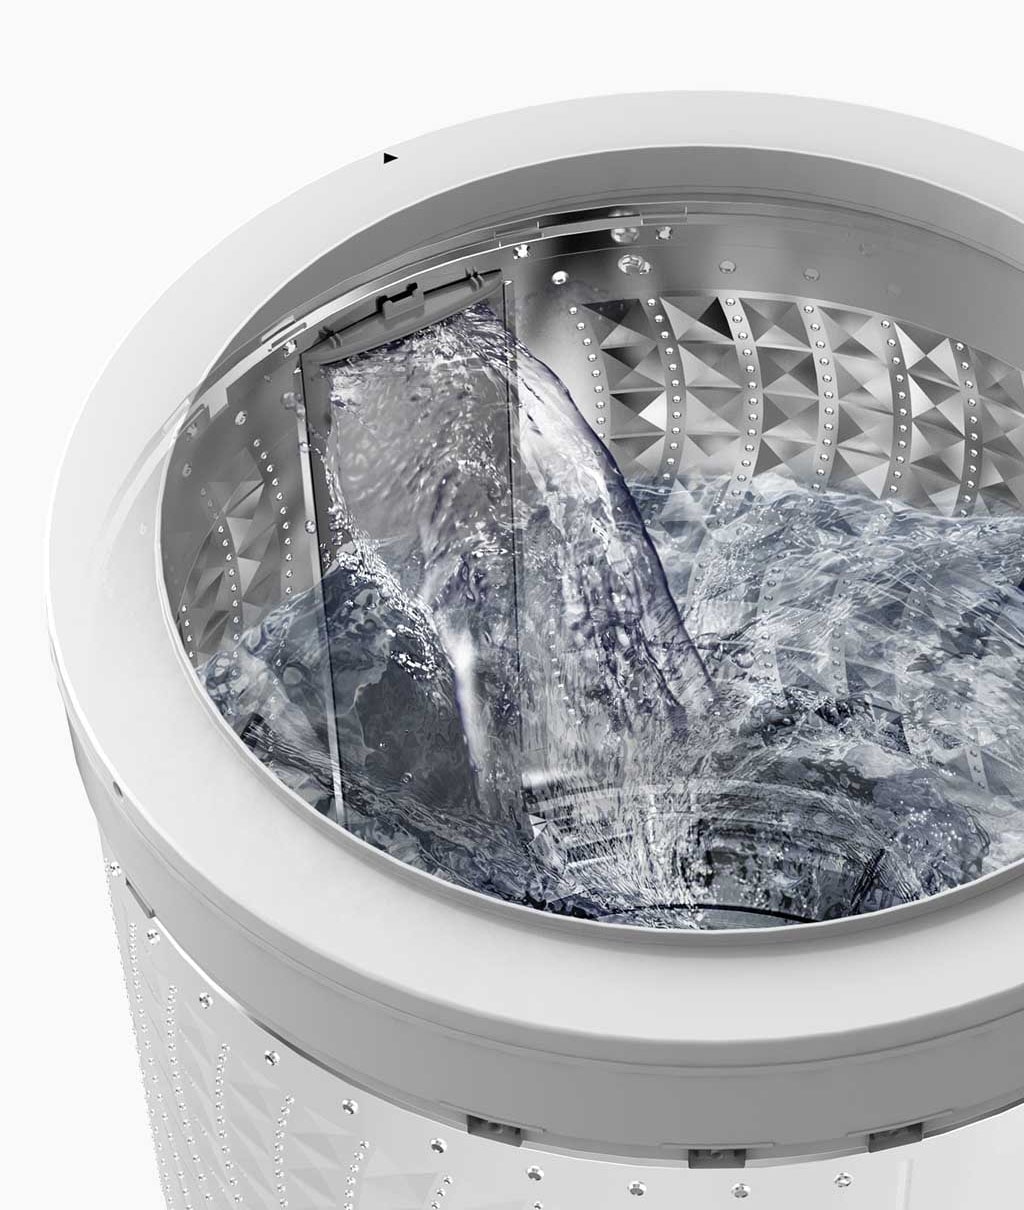 Washing machine with water fall technology